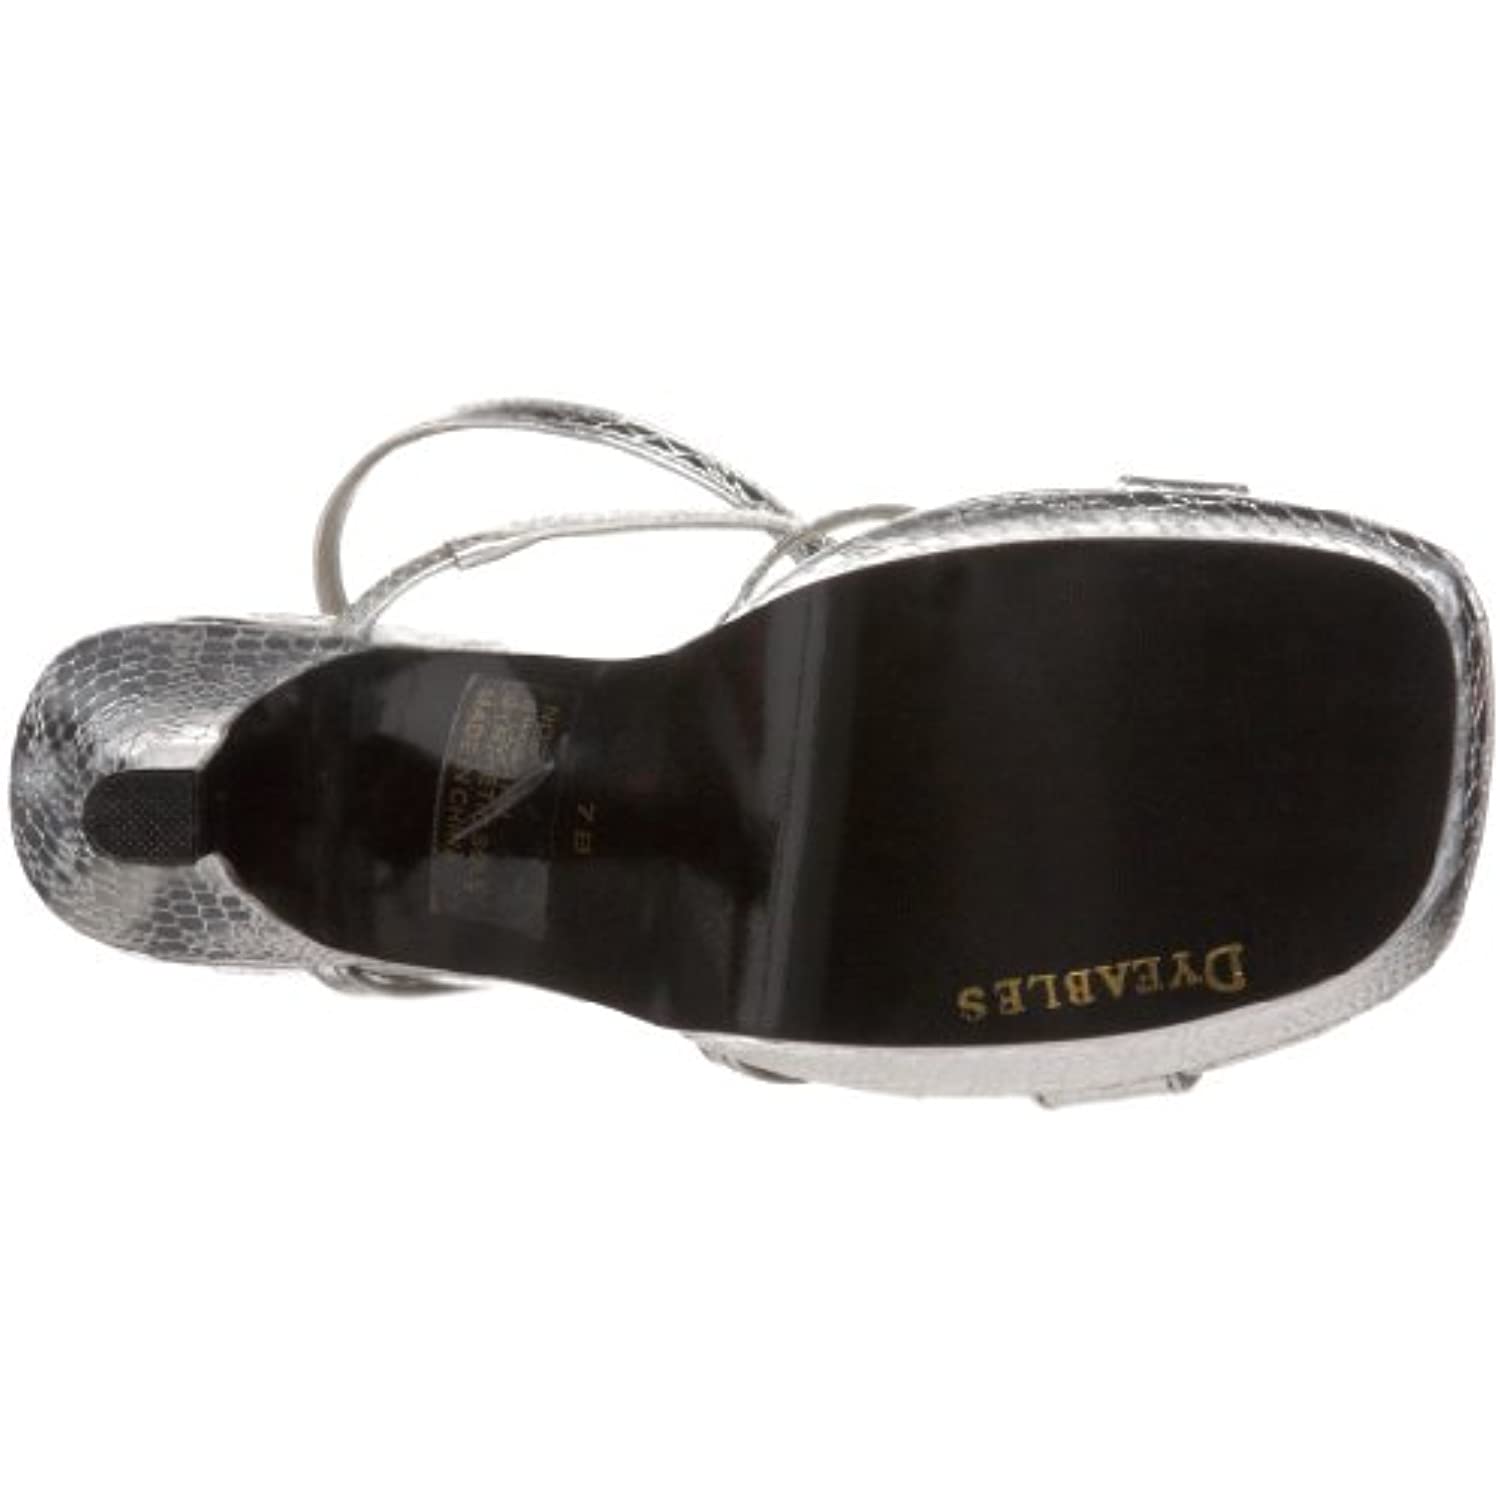 Dyeables Women's Nola Platform Sandal,Silver Reptile,4.5 B US